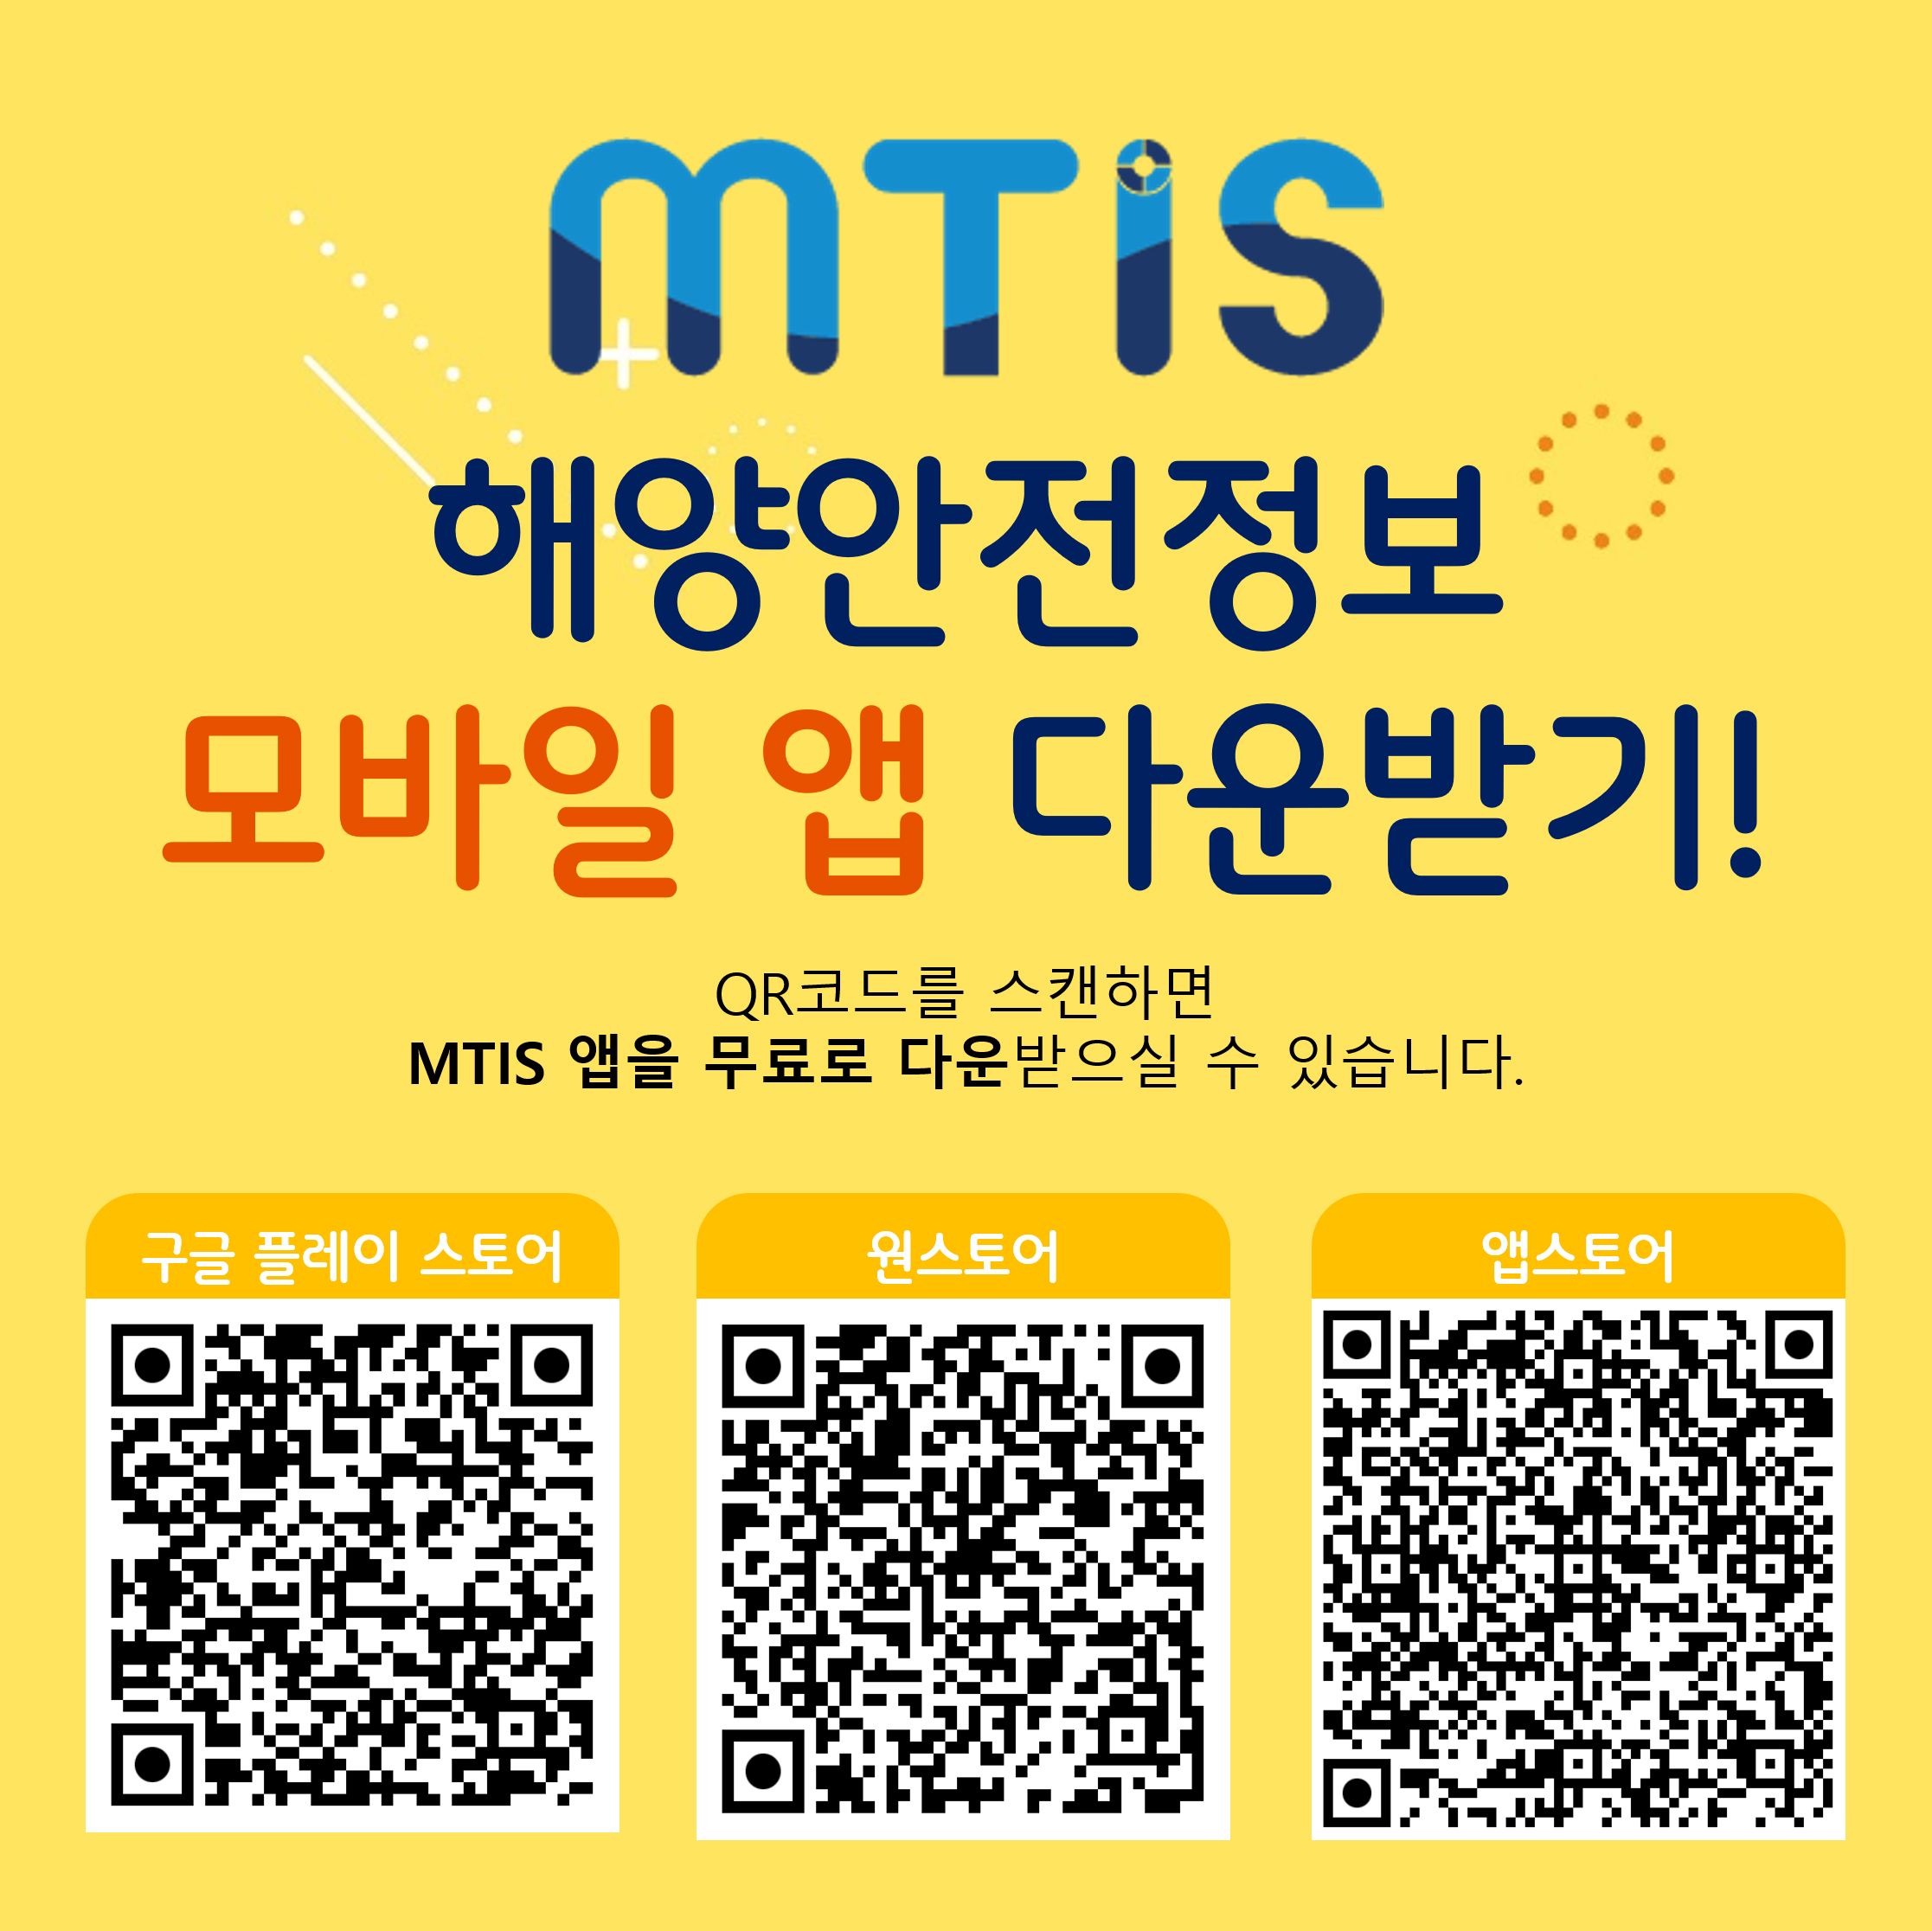 MTIS 해양안전정보 모바일 앱 다운받기!
QR코드를 스캔하면 MTIS 앱을 무료로 다운 받으실수 있습니다.
구글 플레이 스토어 : https://play.google.com/store/apps/details;jsessionid=8321B7EF484574A1D8E5275404520387?id=kr.or.komsa.mtis
원스토어 : https://m.onestore.co.kr/mobilepoc/apps/appsDetail.omp?prodId=0000771271
앱스토어 : https://apps.apple.com/kr/app/%ED%95%B4%EC%96%91%EA%B5%90%ED%86%B5%EC%95%88%EC%A0%84%EC%A0%95%EB%B3%B4/id6462842483